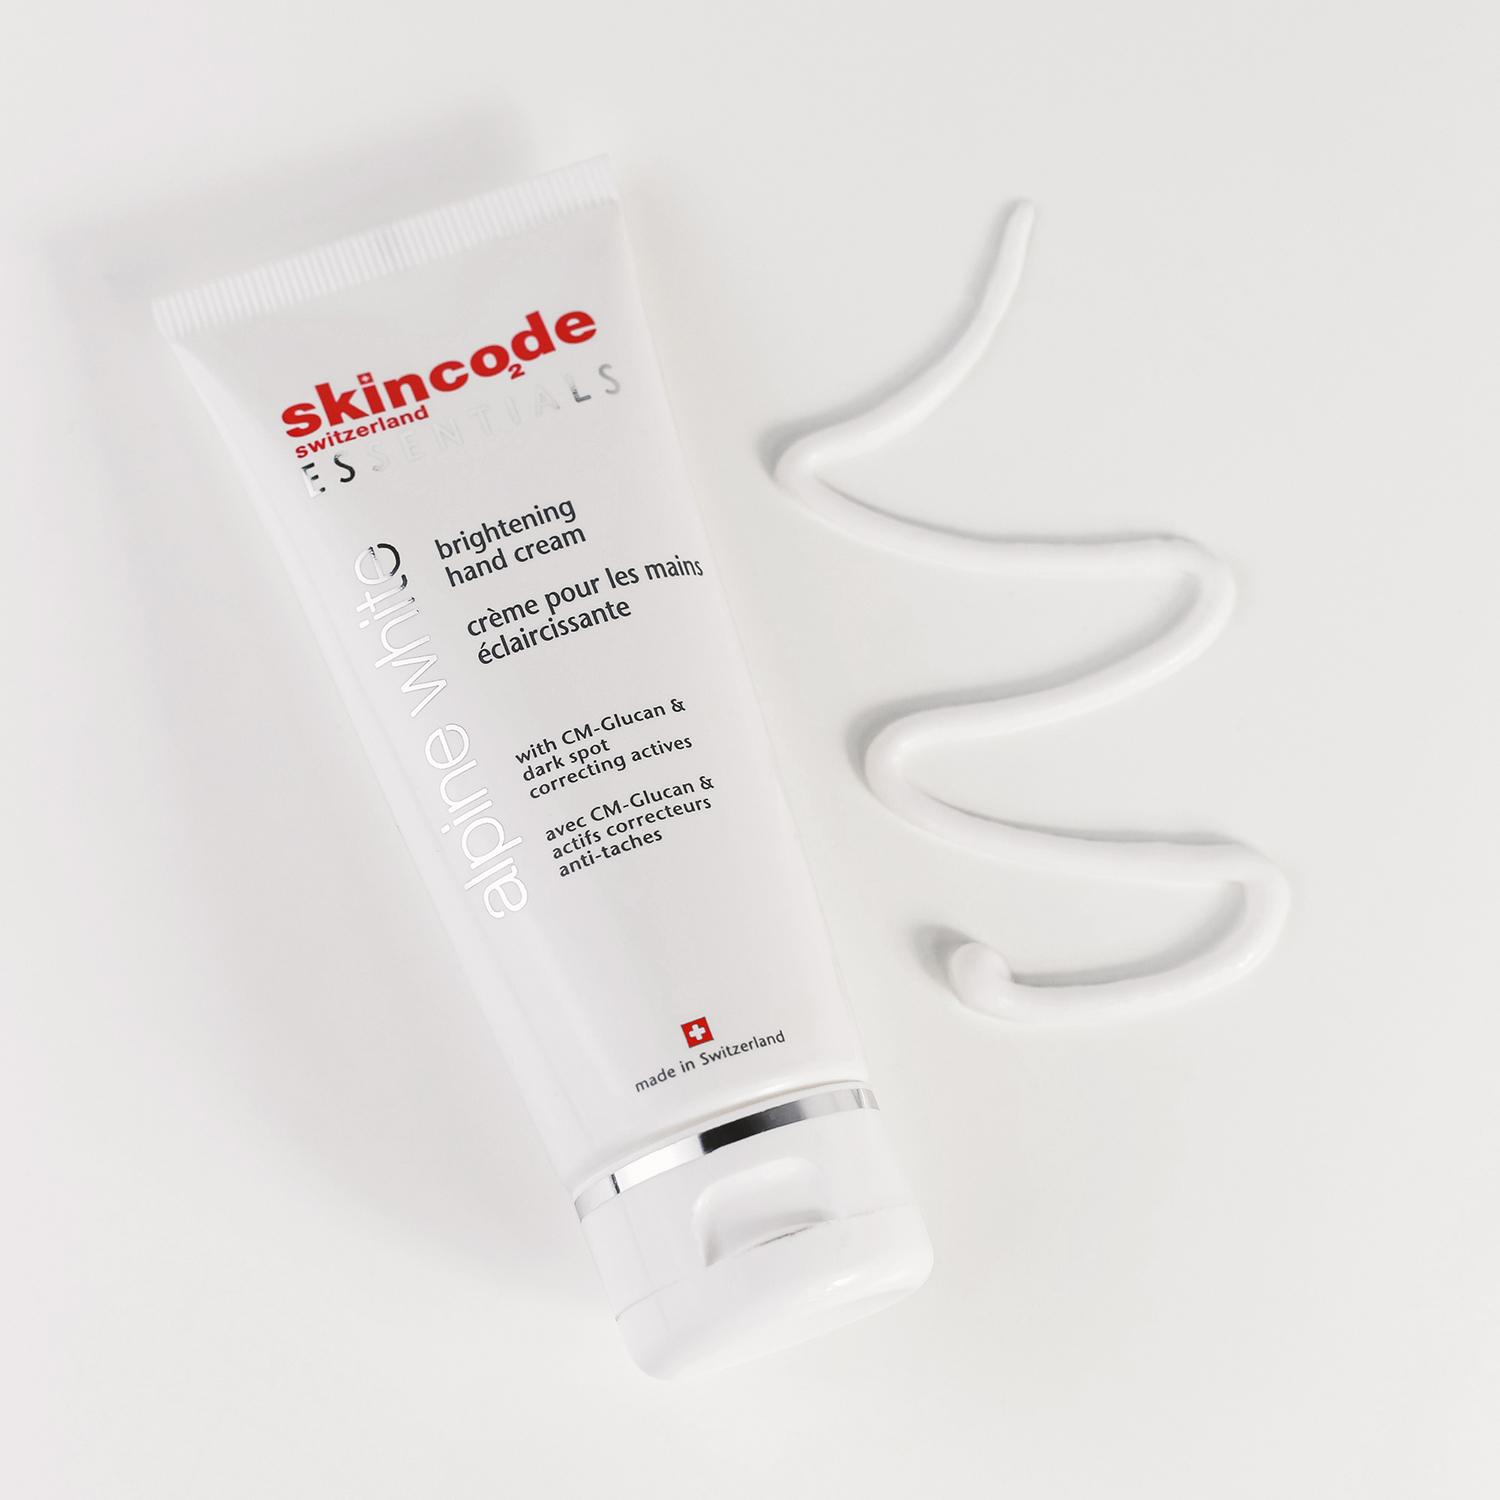 Kem dưỡng trắng và bảo vệ da tay Skincode Essentials Alpine White Brightening Hand Cream